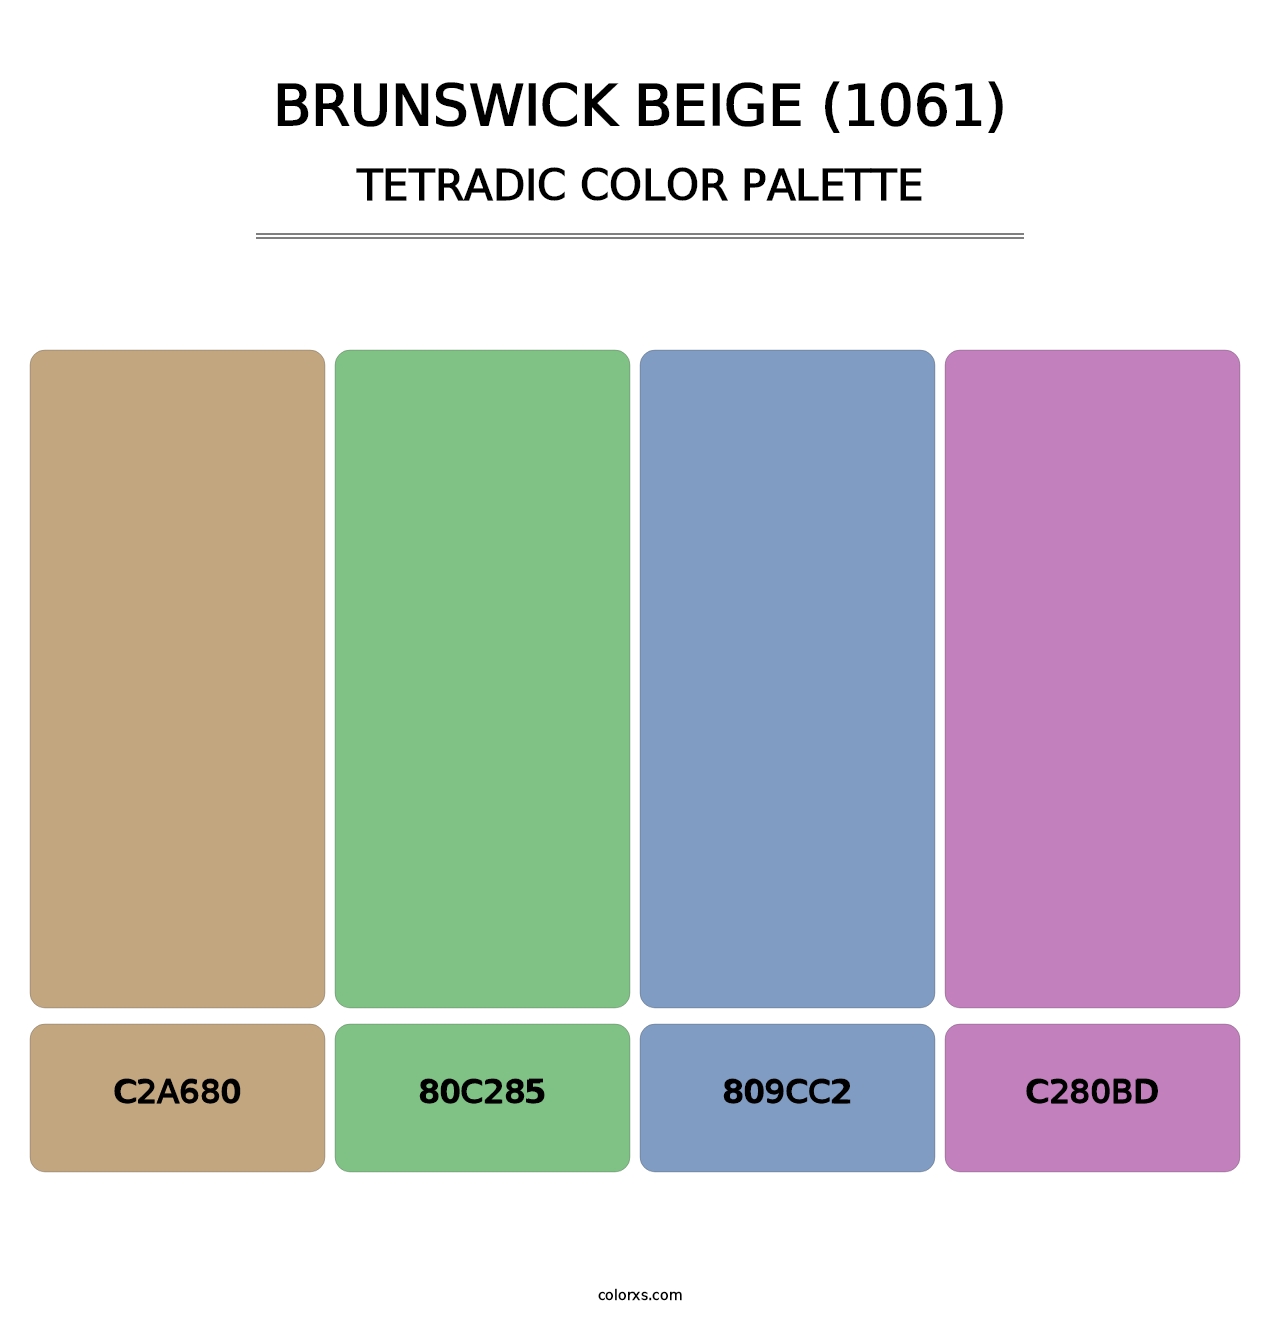 Brunswick Beige (1061) - Tetradic Color Palette